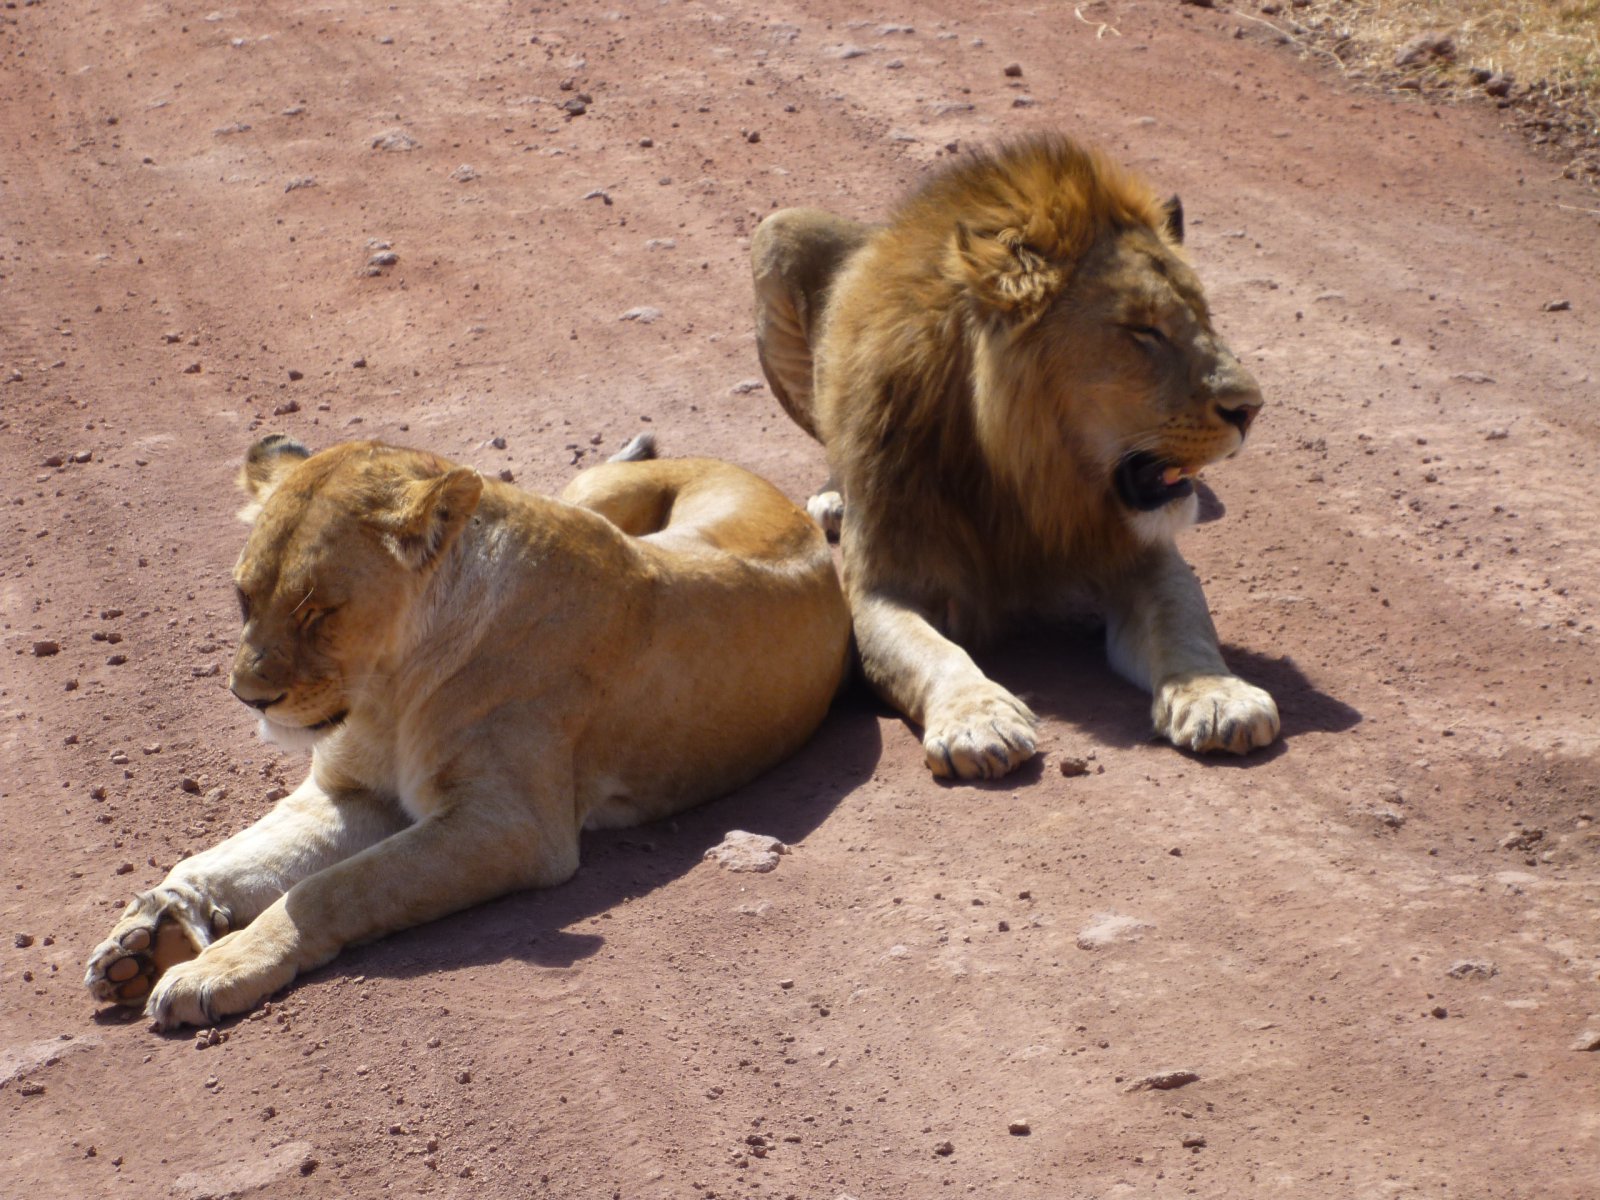 Ngorongoro_lions